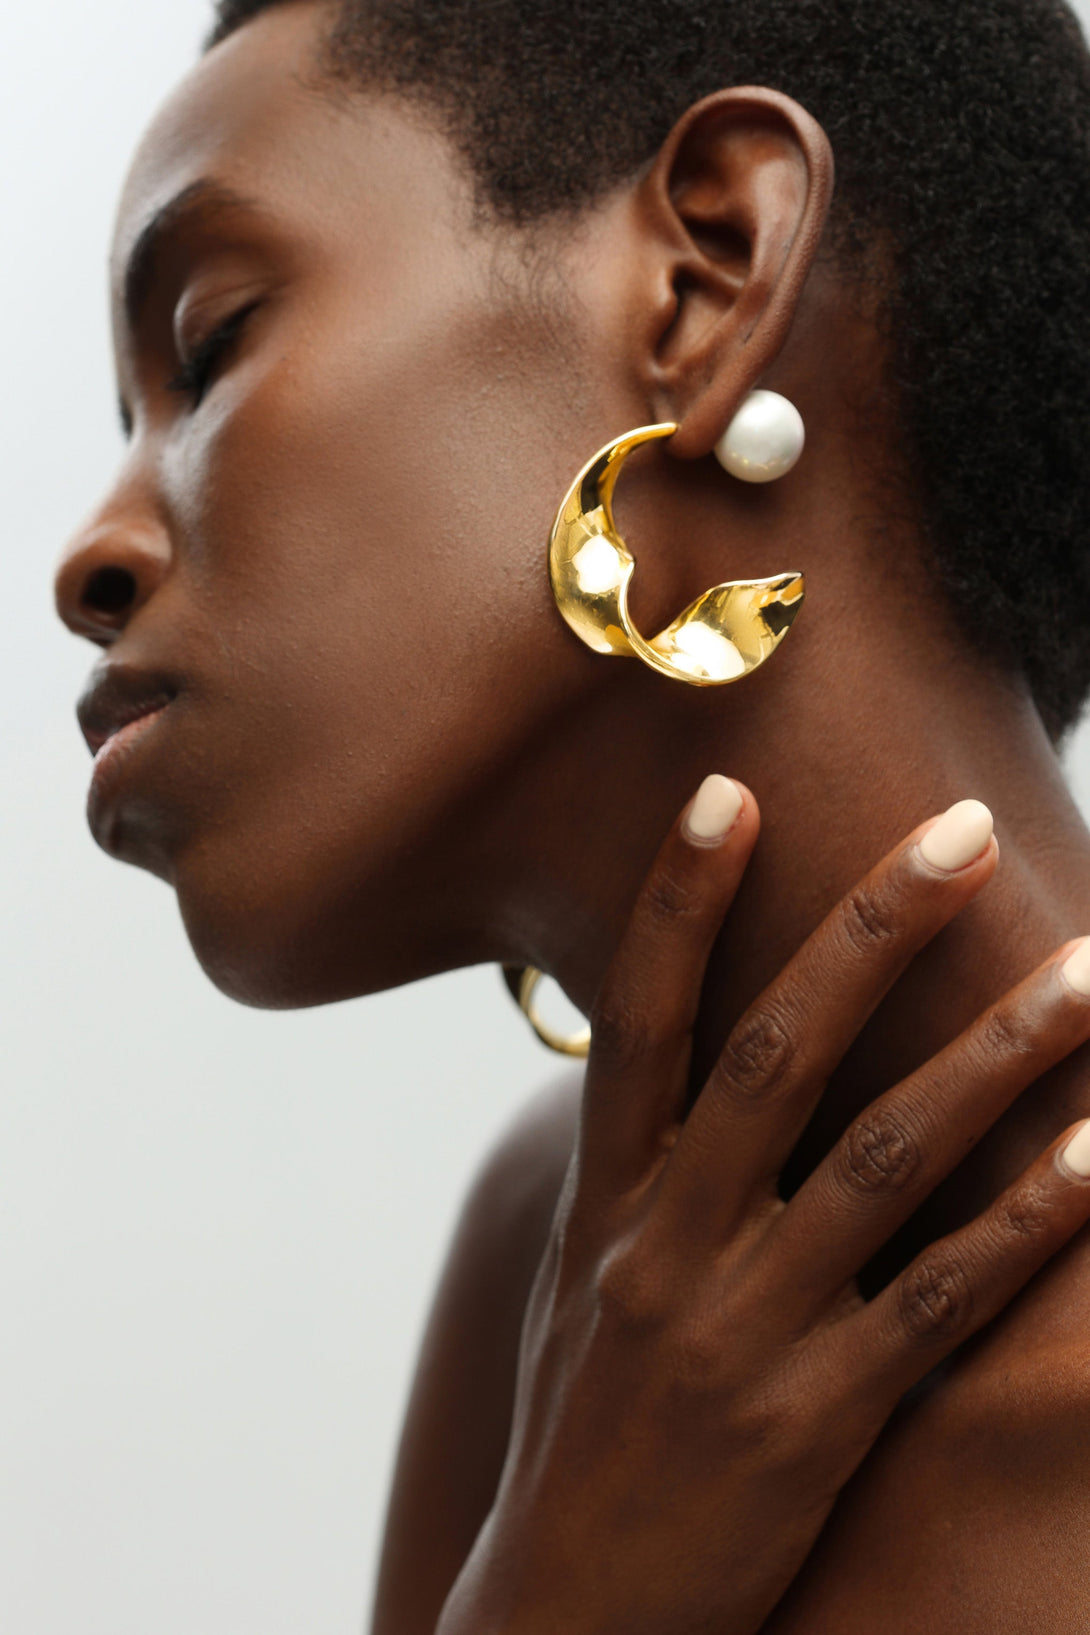 Gold Chunky Wave Hoop Earrings - Classicharms